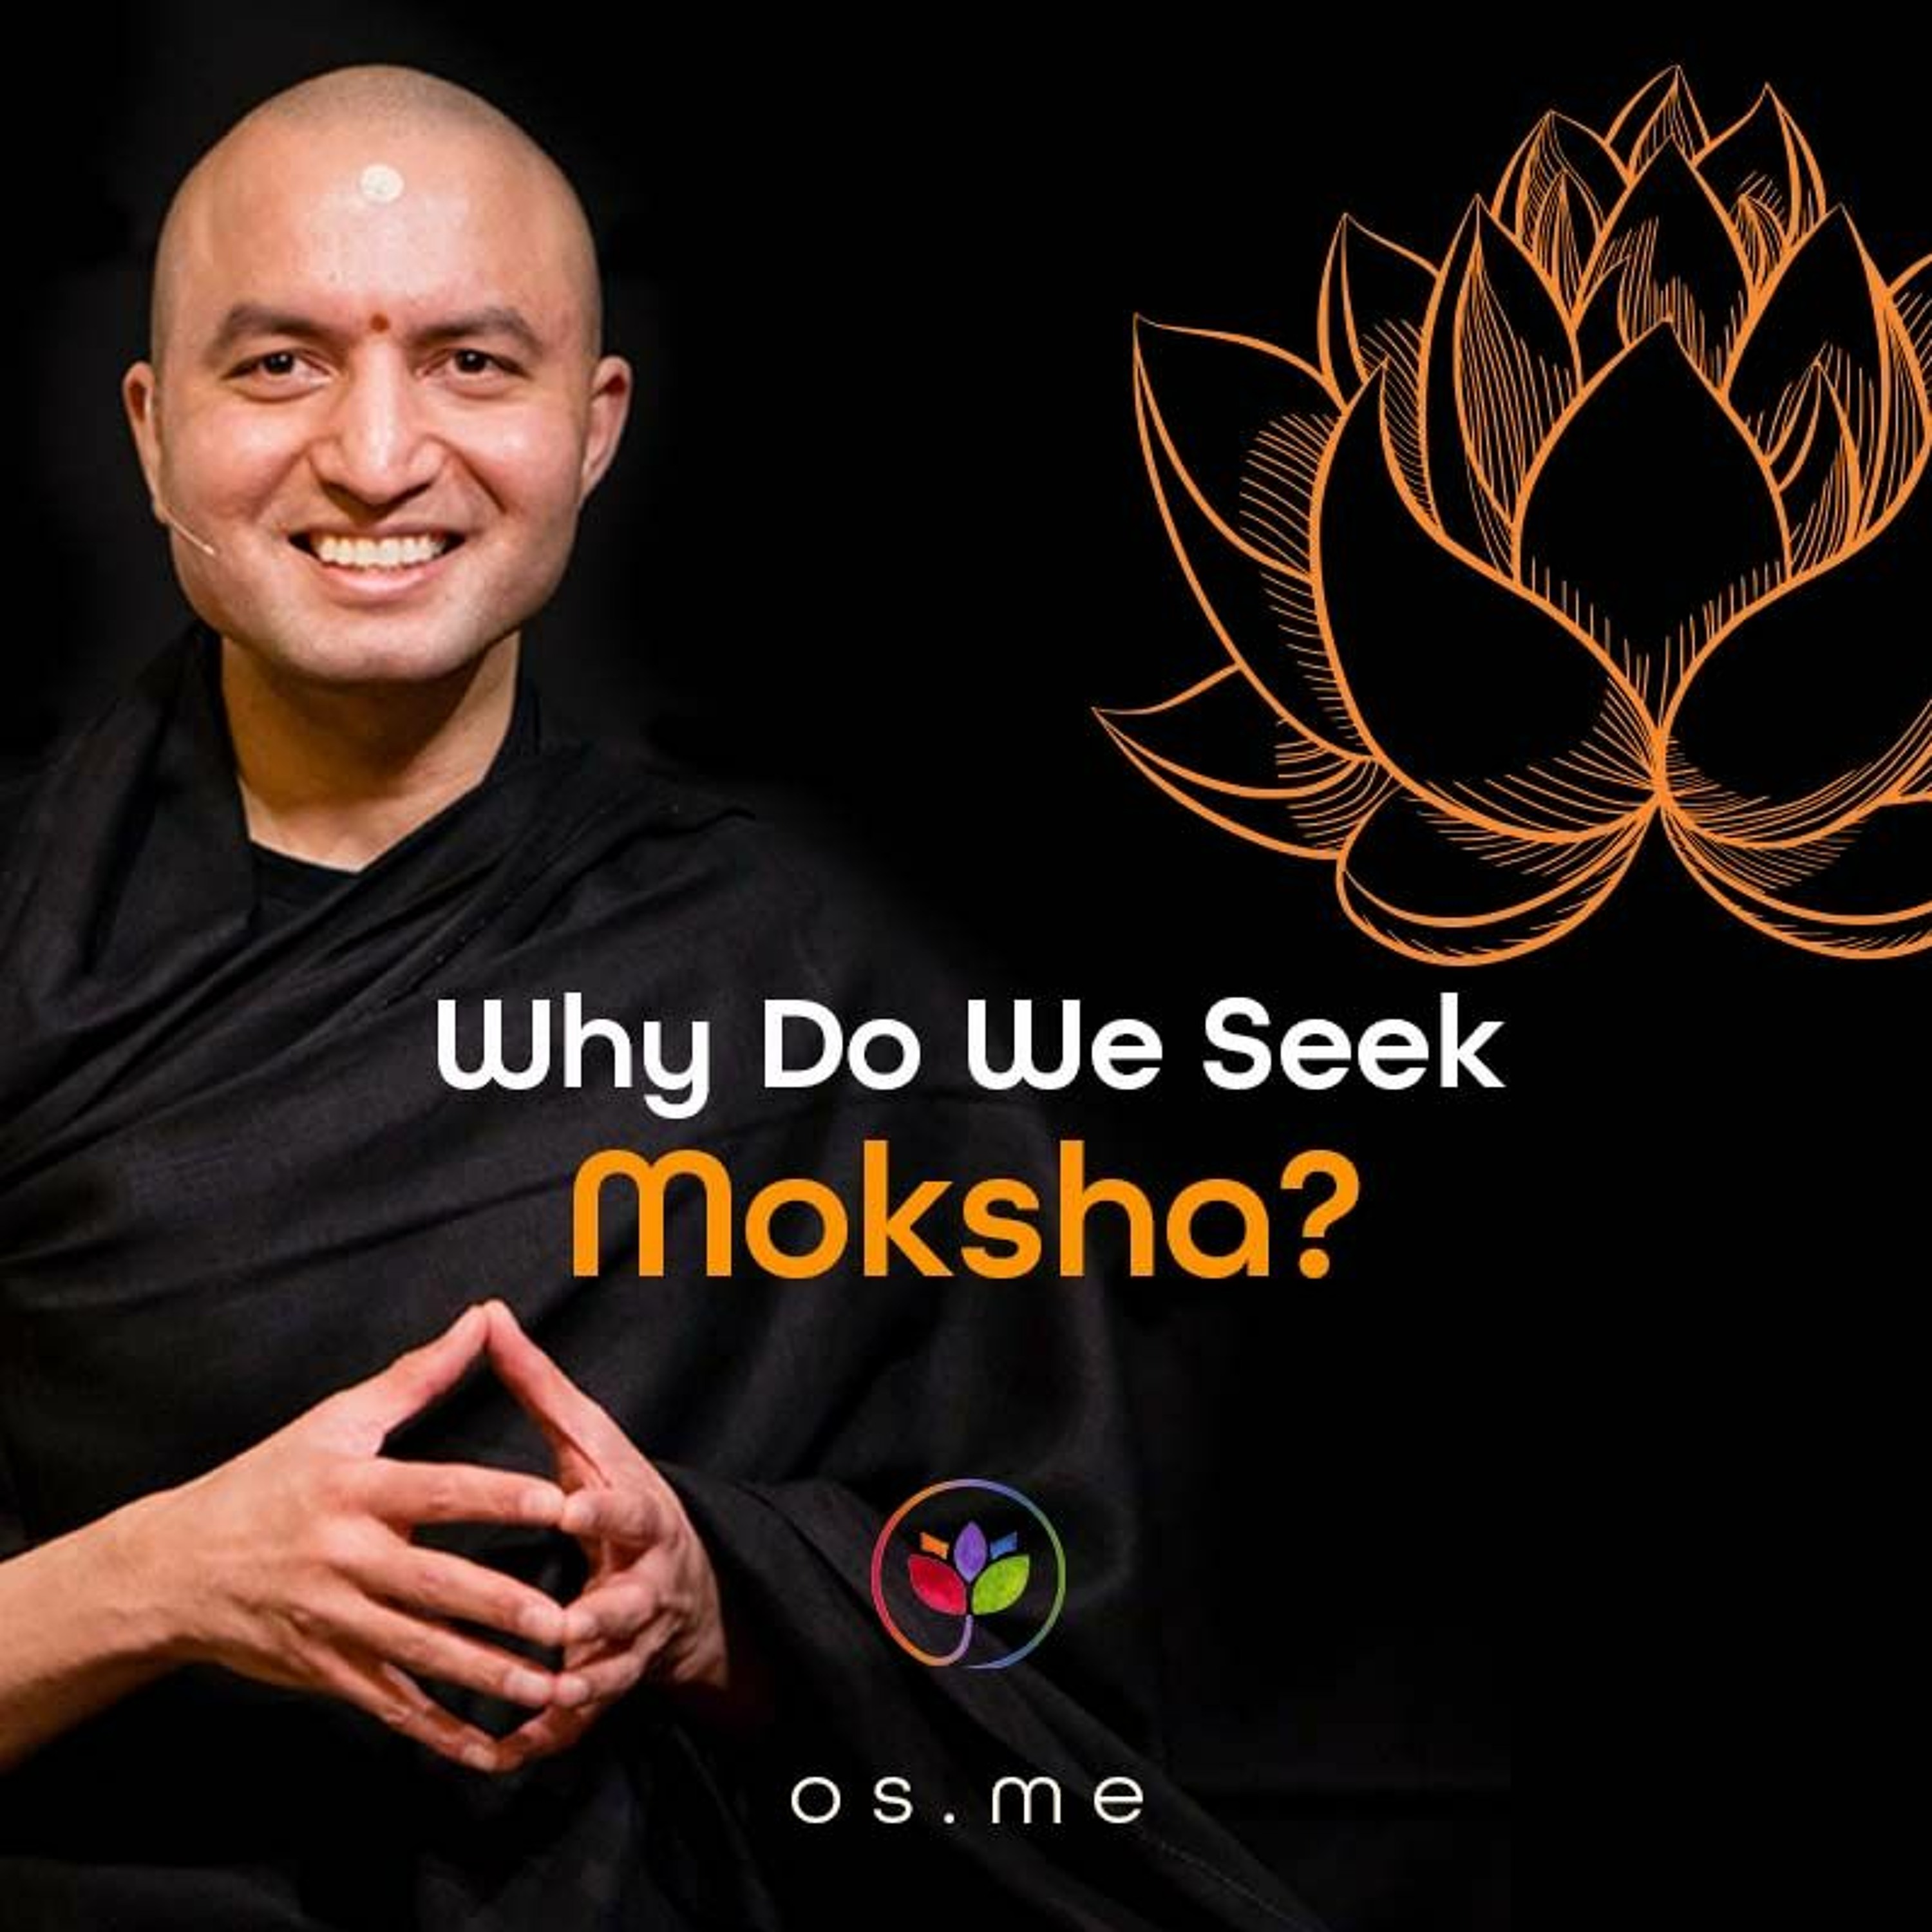 Why Do We Seek Moksha - [Hindi]